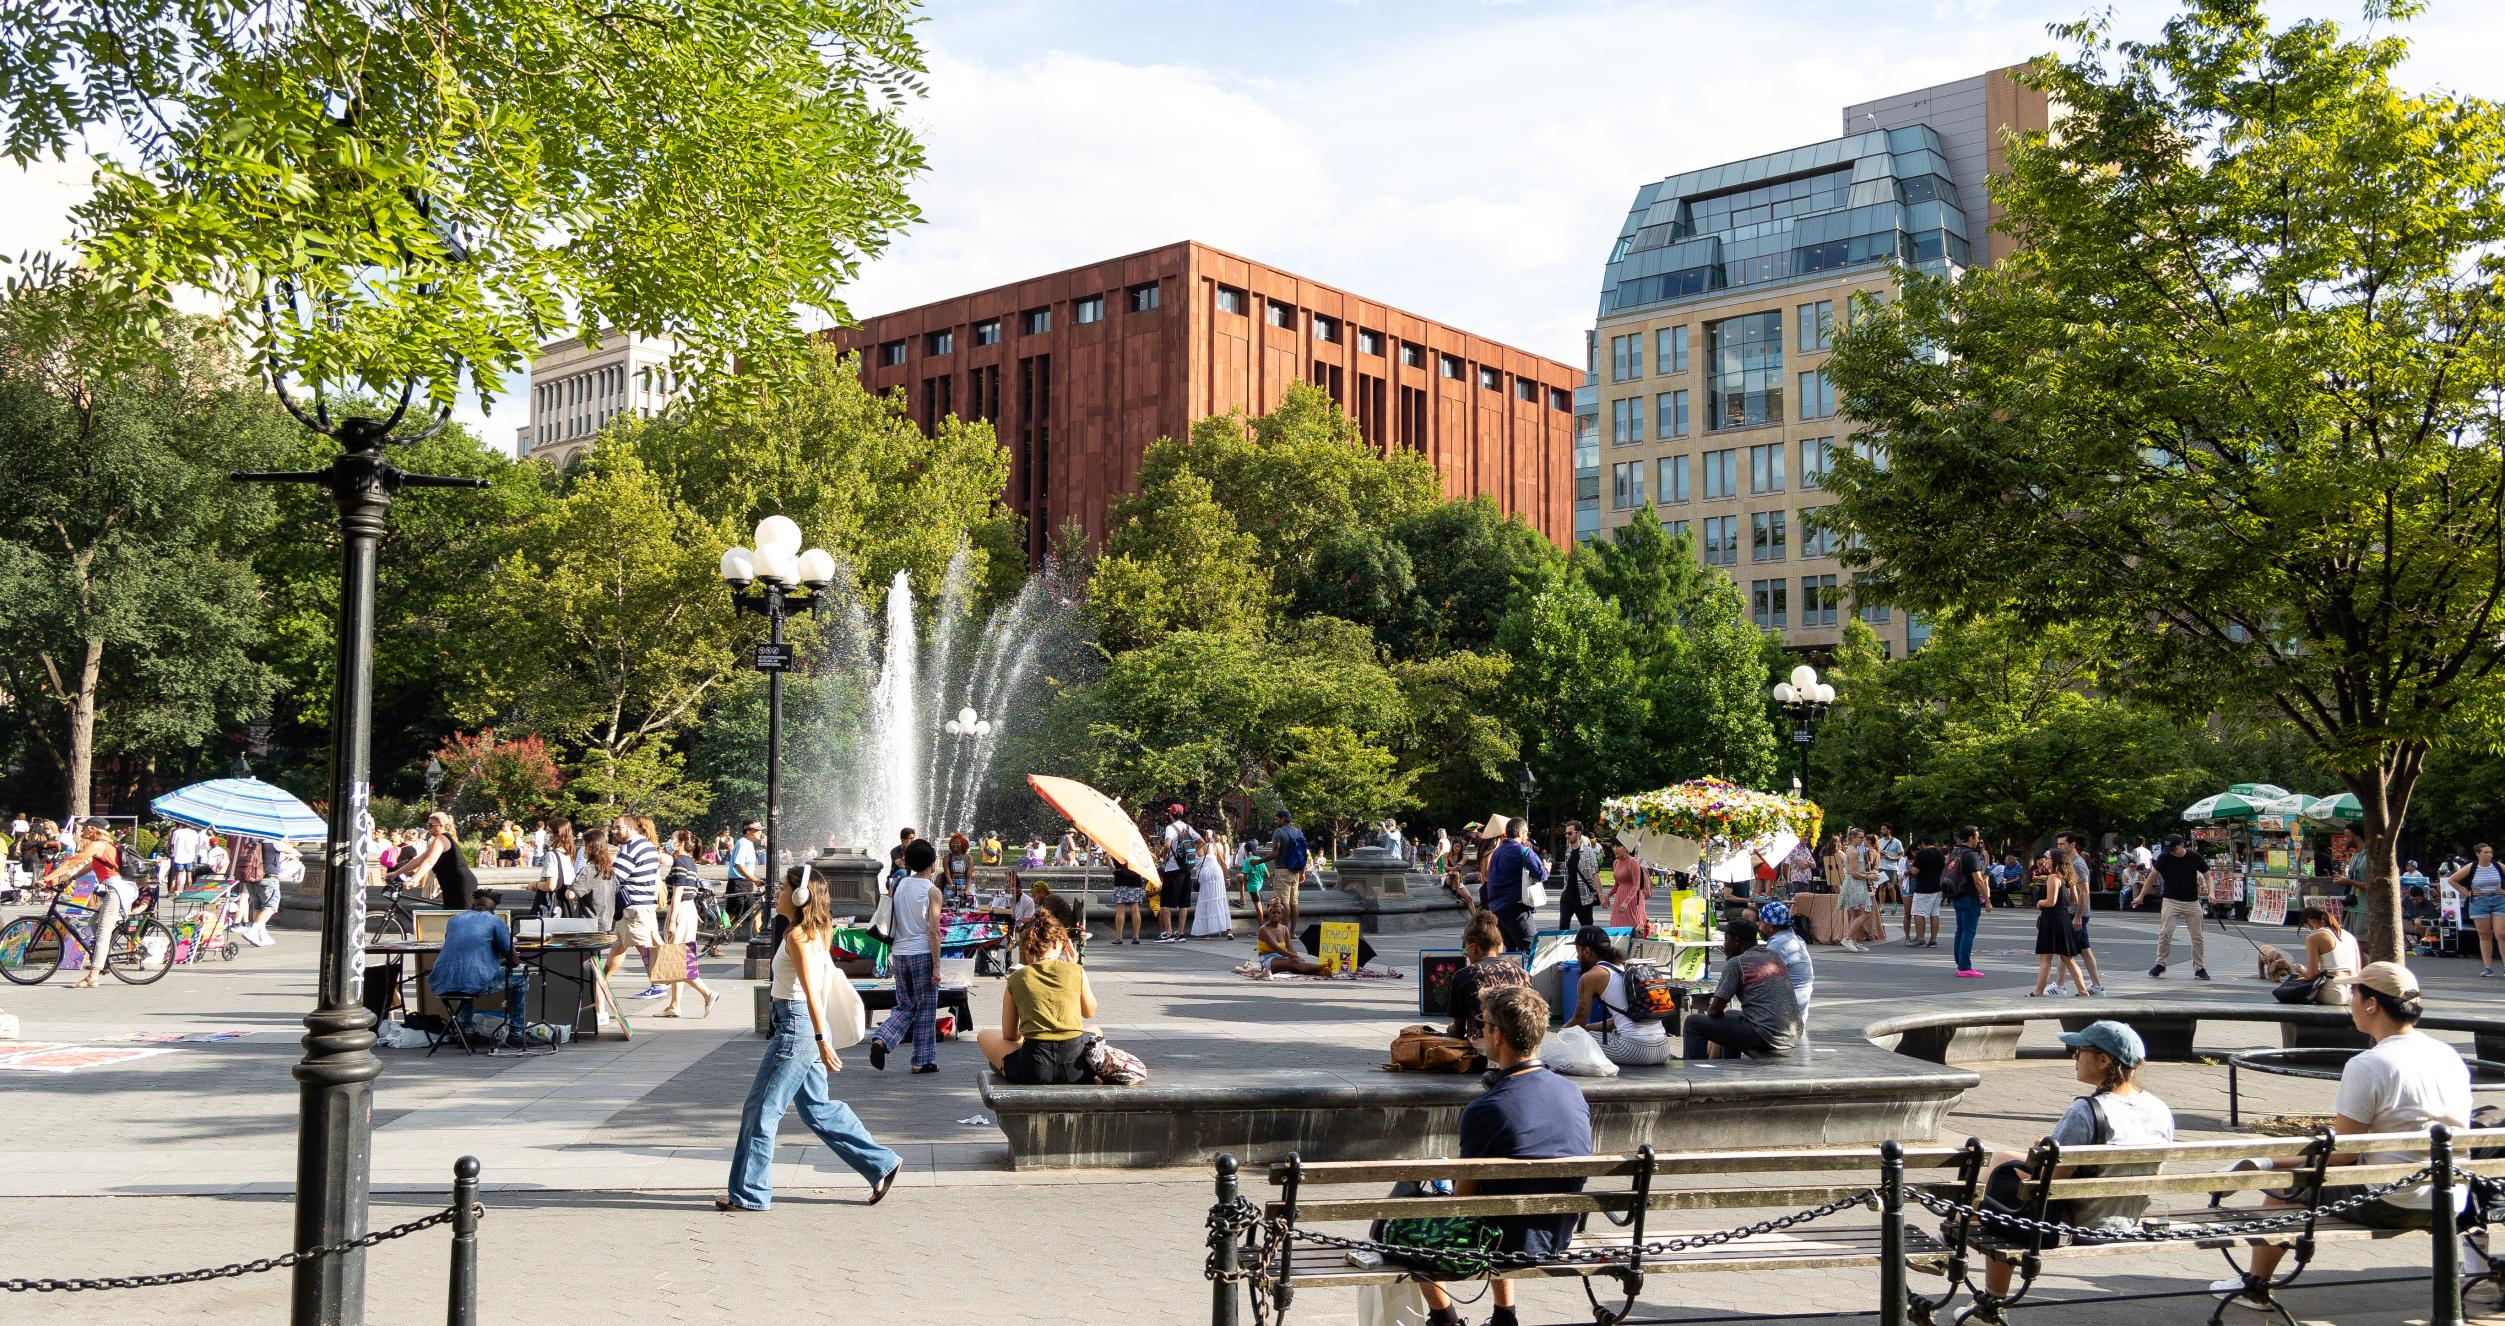 A view of Washington Square Park